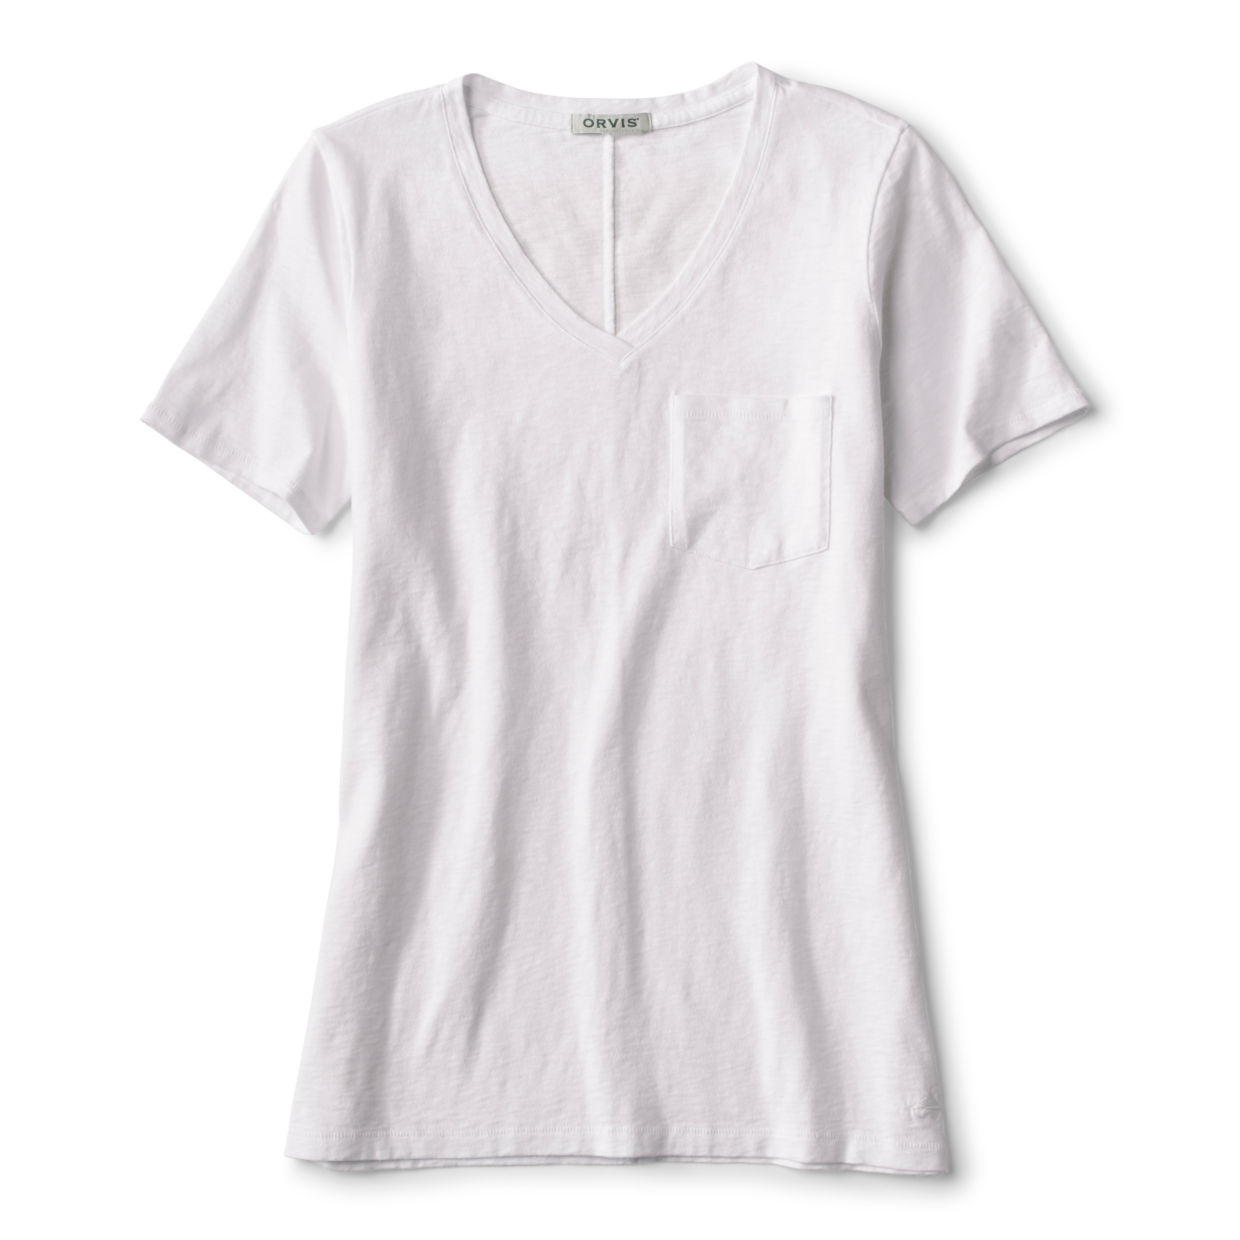 Women's Canyon Garment-Dyed V-Neck Short-Sleeved T-Shirt White Size Large Cotton Orvis